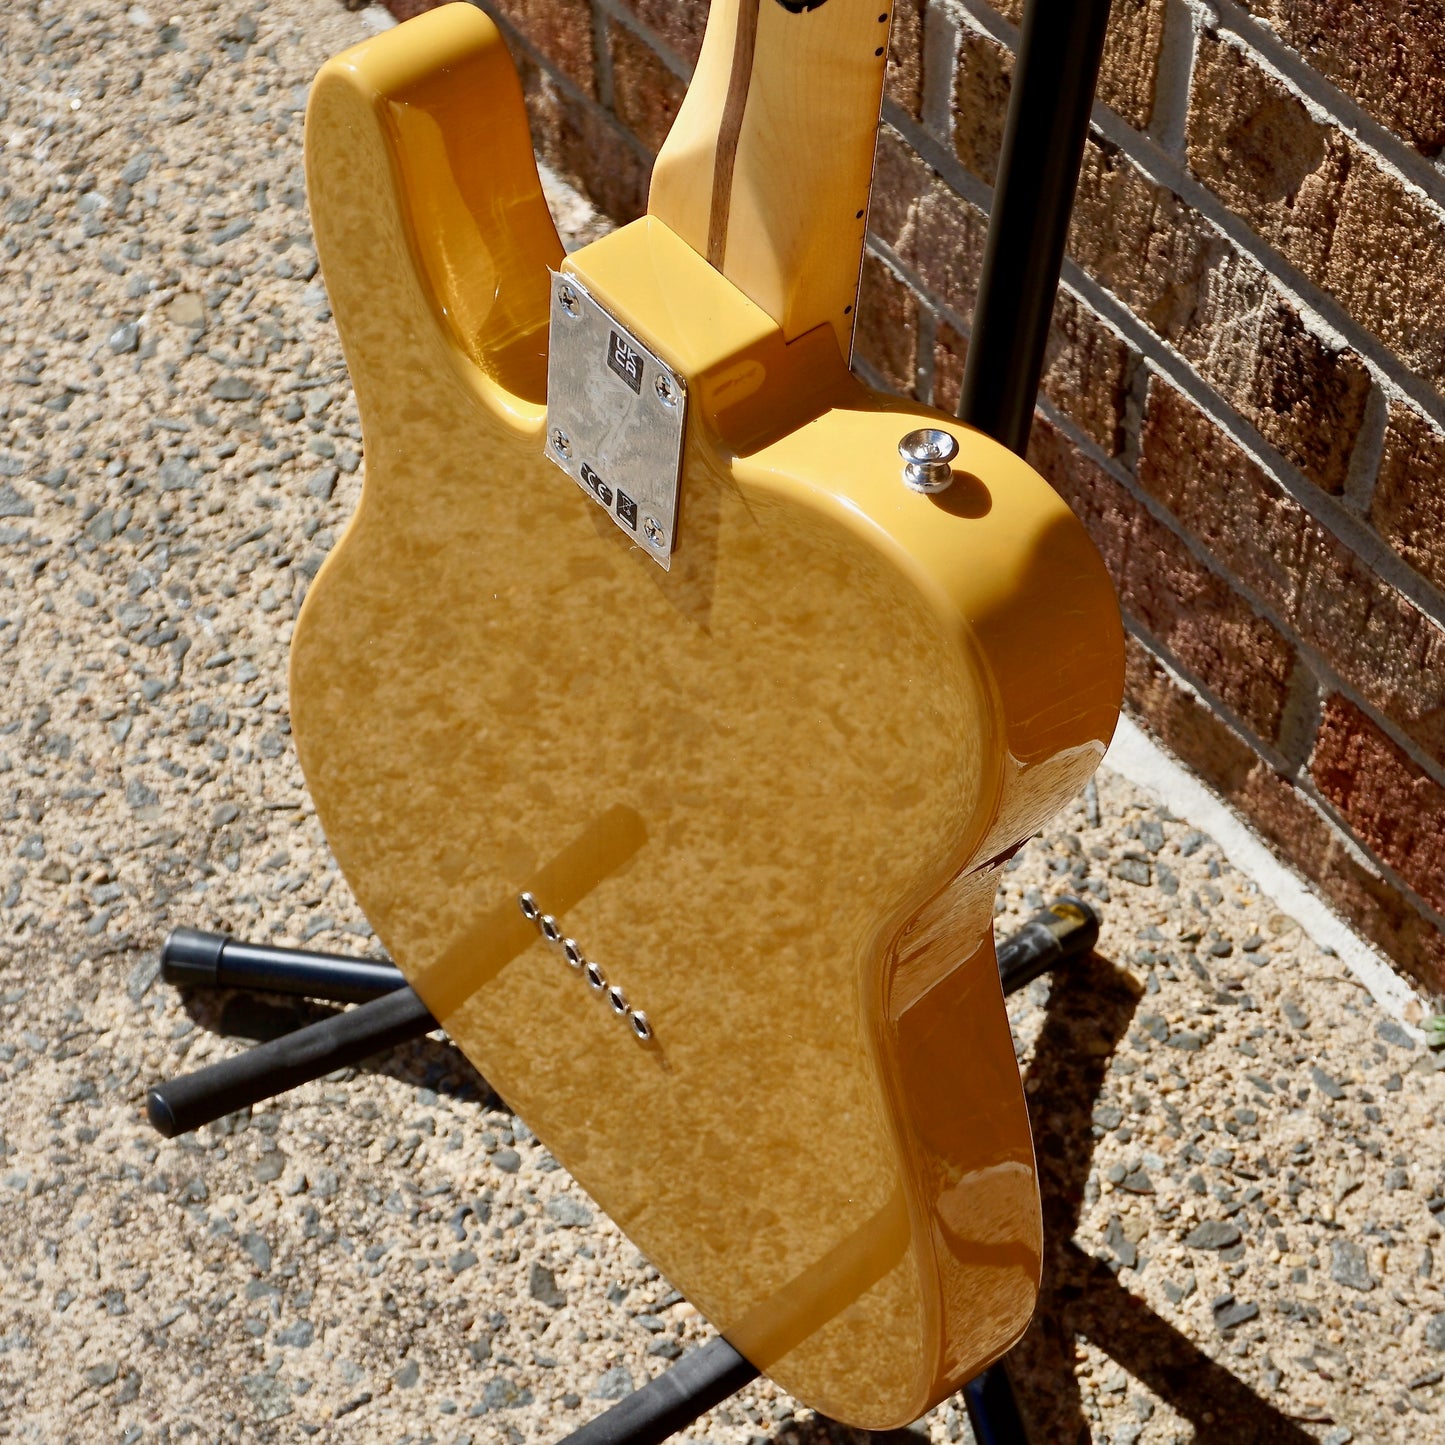 Fender Player Telecaster Maple Fingerboard Butterscotch Blonde